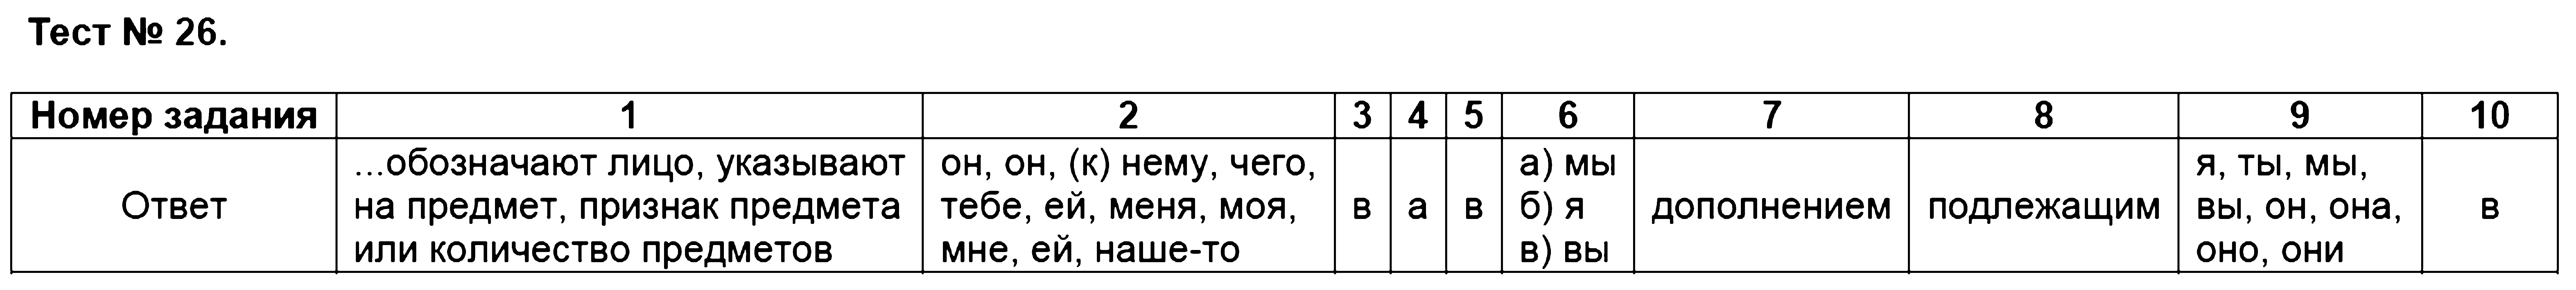 ГДЗ Русский язык 6 класс - Тест 26